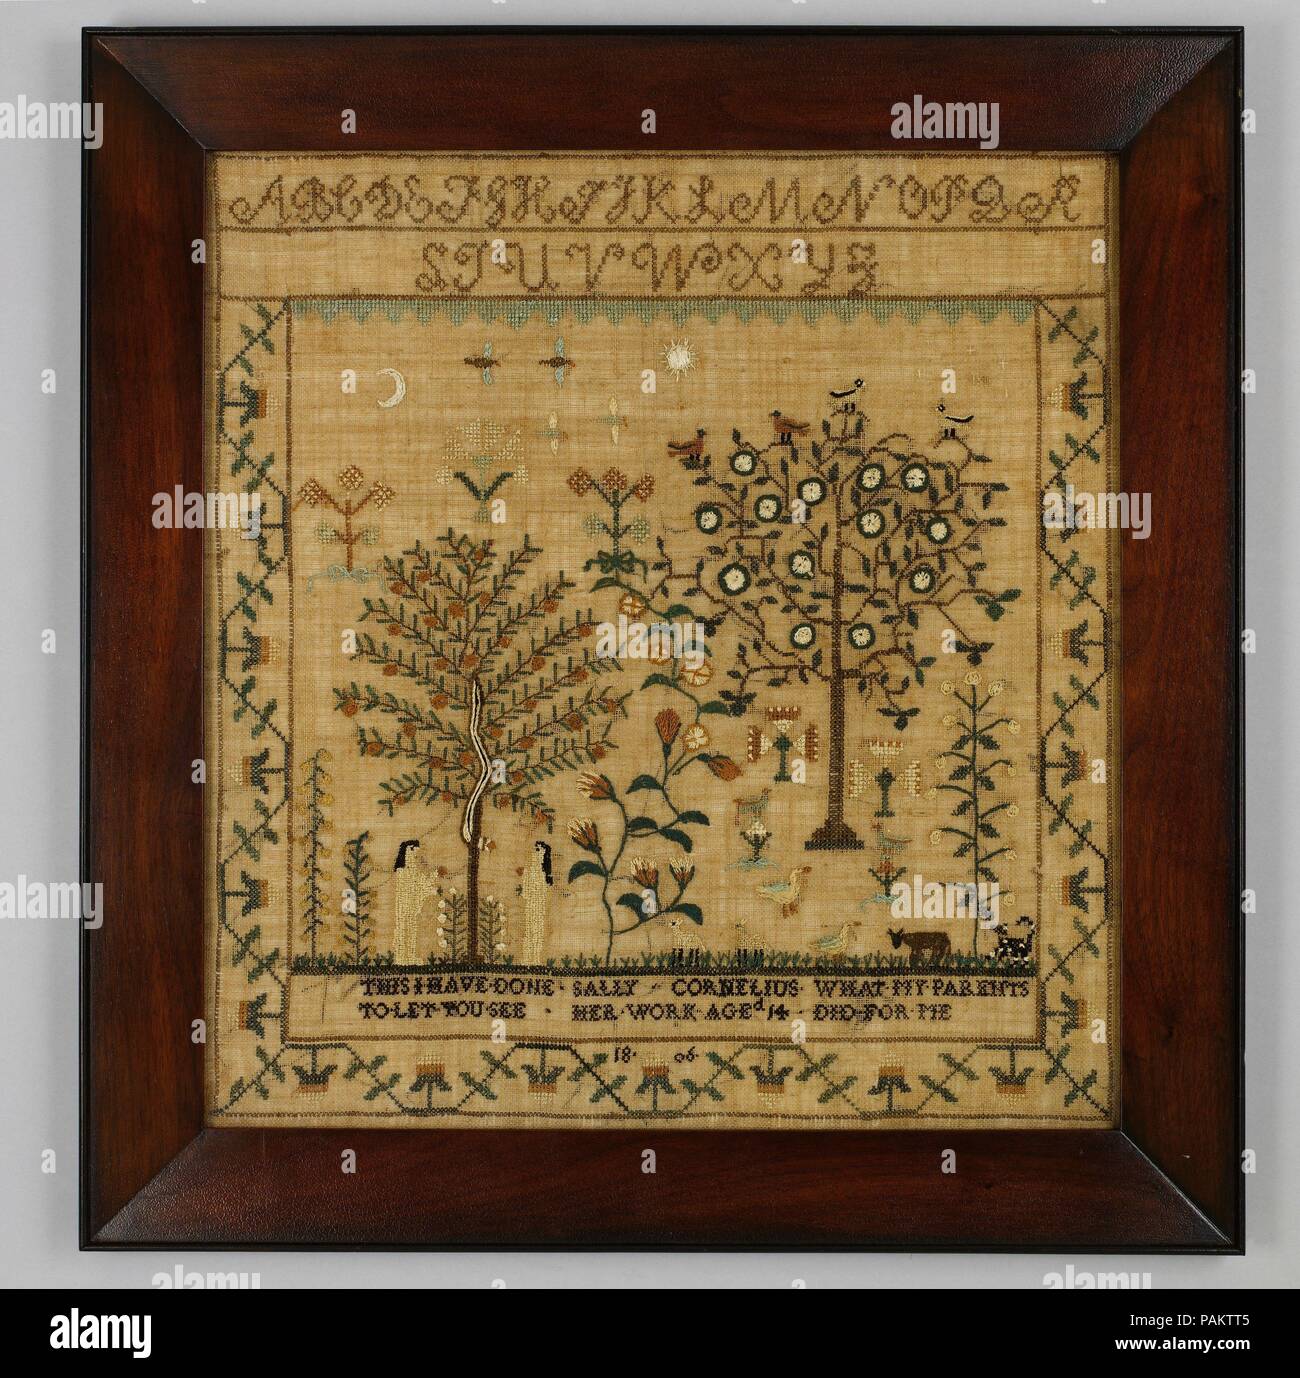 Embroidered sampler. Culture: American. Dimensions: 17 1/4 x 16 1/4 in. (43.8 x 41.3 cm). Maker: Sally Cornelius (1792-1877). Date: 1806. Museum: Metropolitan Museum of Art, New York, USA. Stock Photo